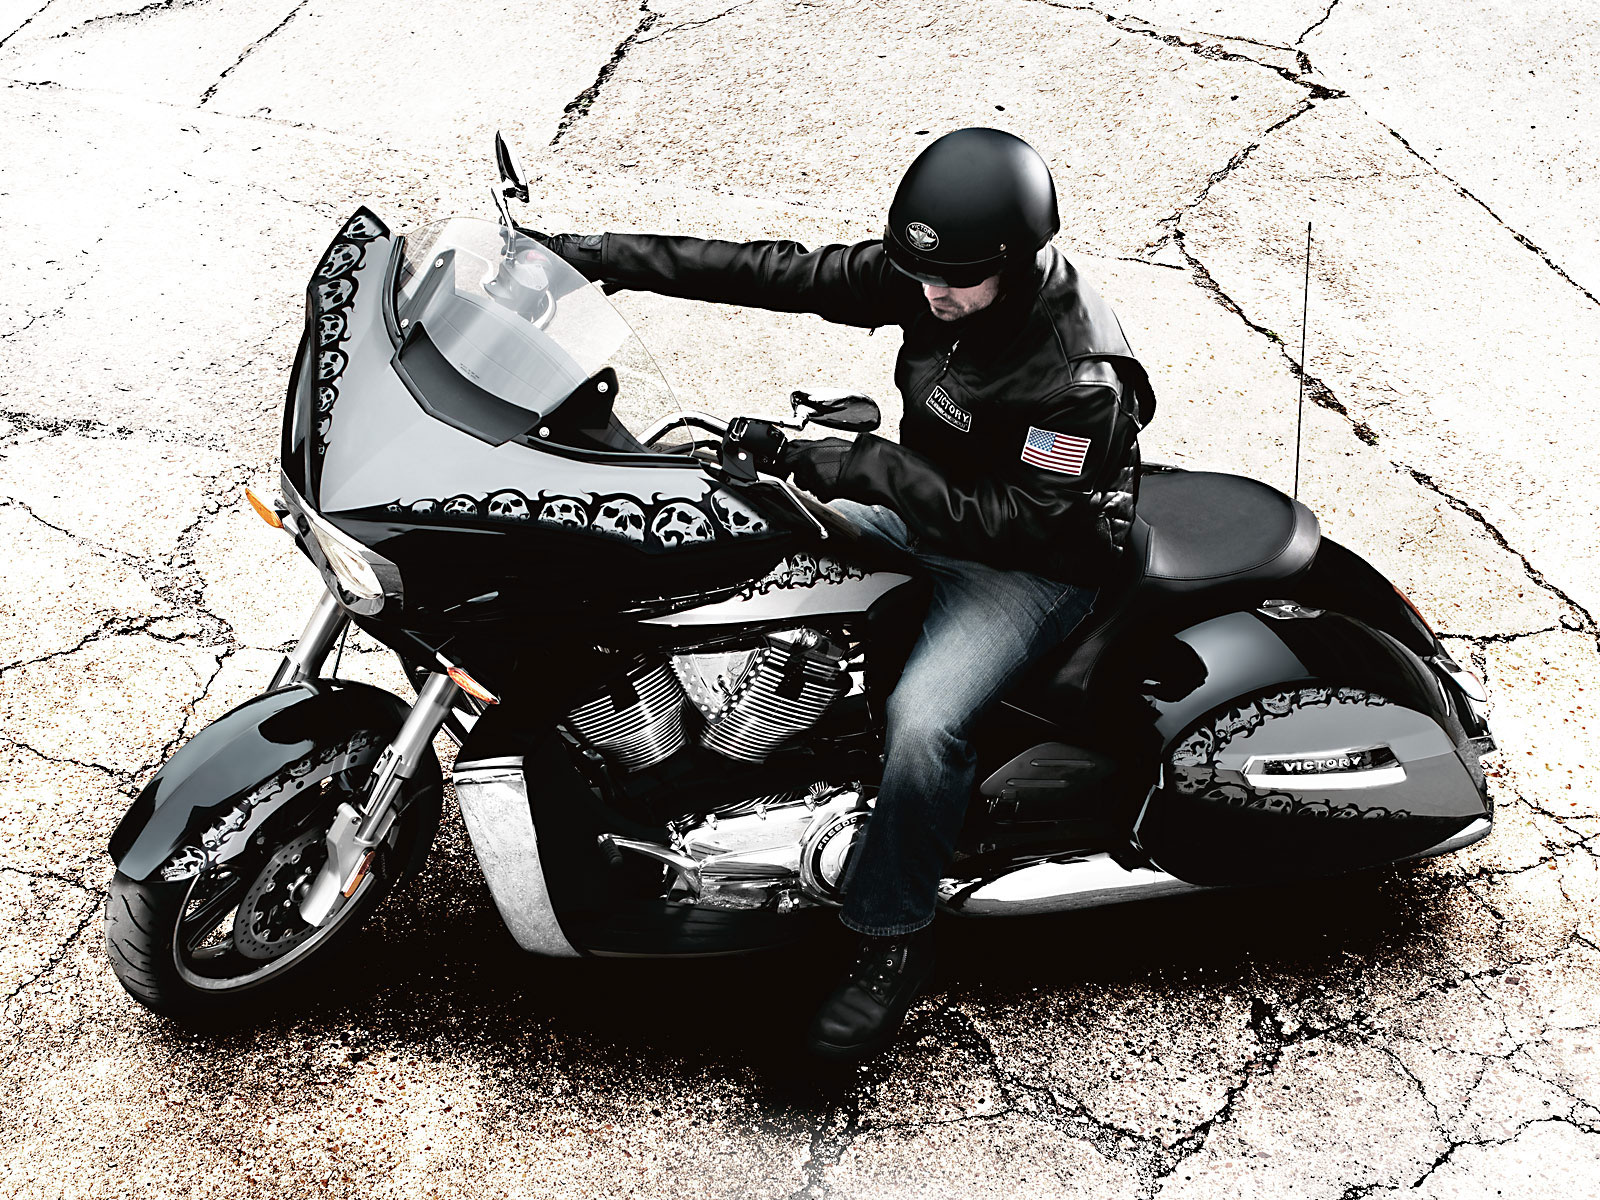 2010 VICTORY Cross Country Motorcycle Desktop Wallpaper